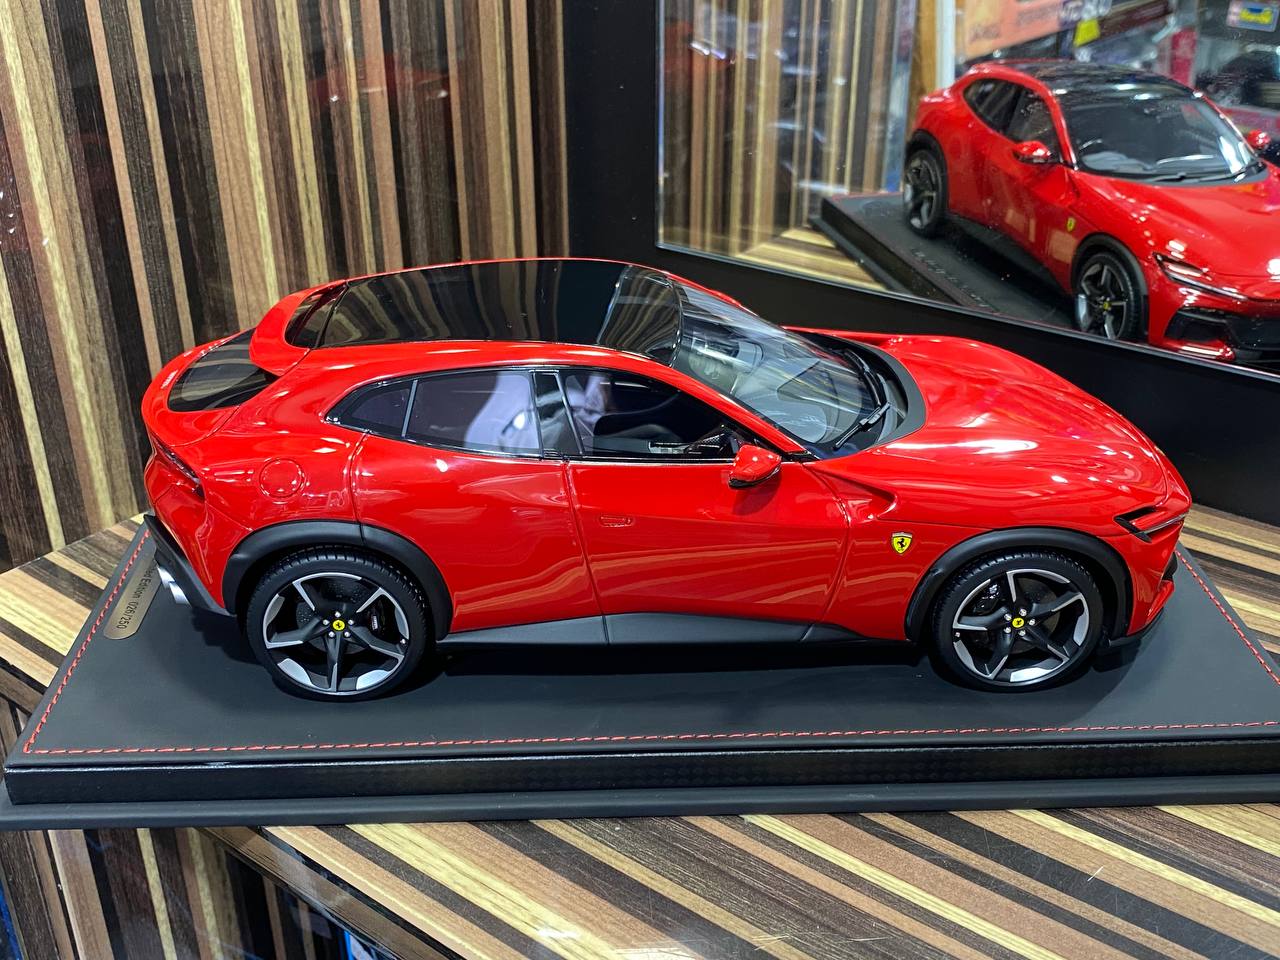 1/18 BBR Models Ferrari Purosangue Red - Limited Edition Resin Collectible|Sold in Dturman.com Dubai UAE.